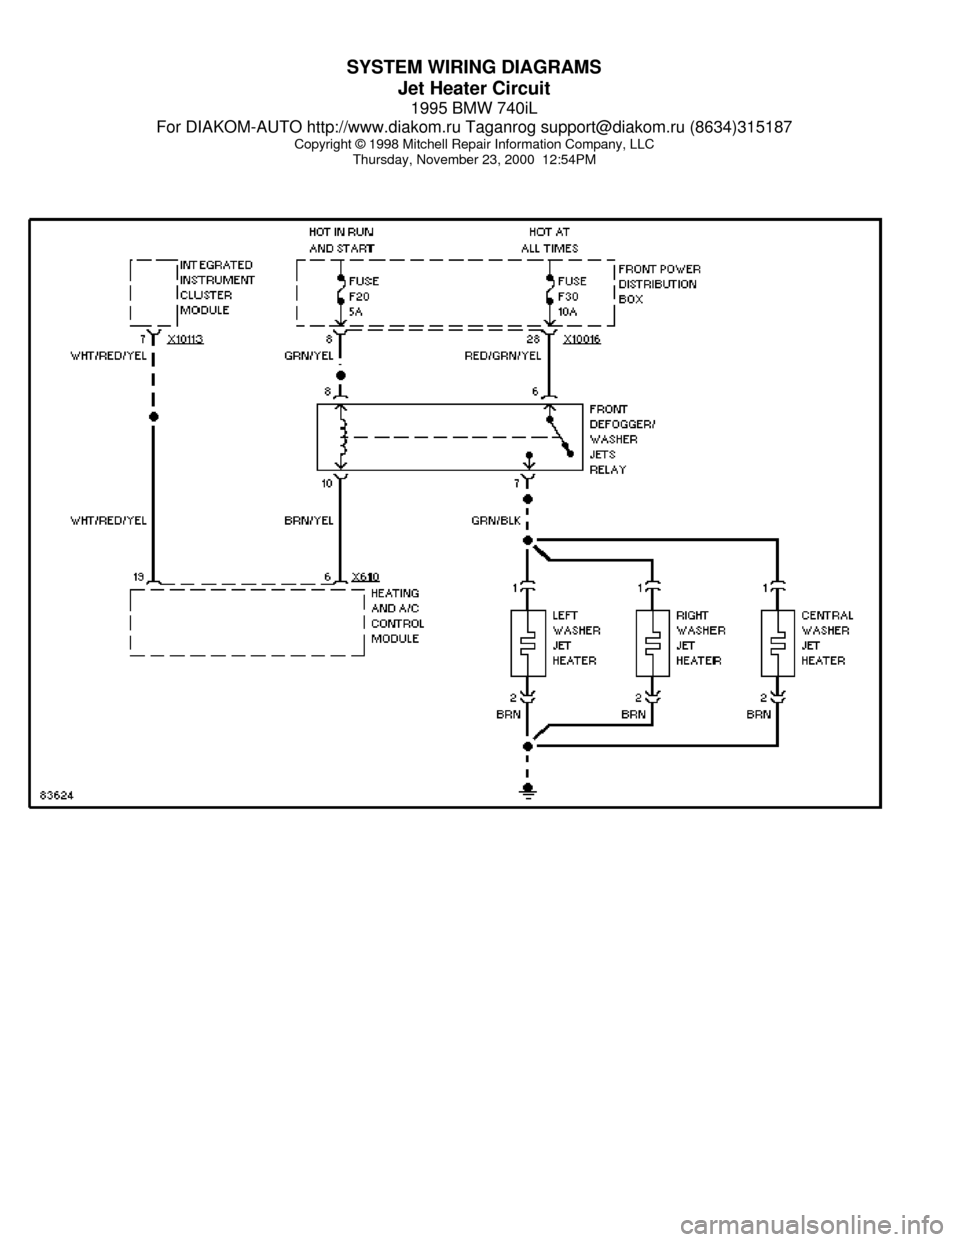 BMW 740il 1995 E38 System Wiring Diagrams SYSTEM WIRING DIAGRAMS
Jet Heater Circuit
1995 BMW 740iL
For DIAKOM-AUTO http://www.diakom.ru Taganrog support@diakom.ru (8634)315187
Copyright © 1998 Mitchell Repair Information Company, LLC
Thursda